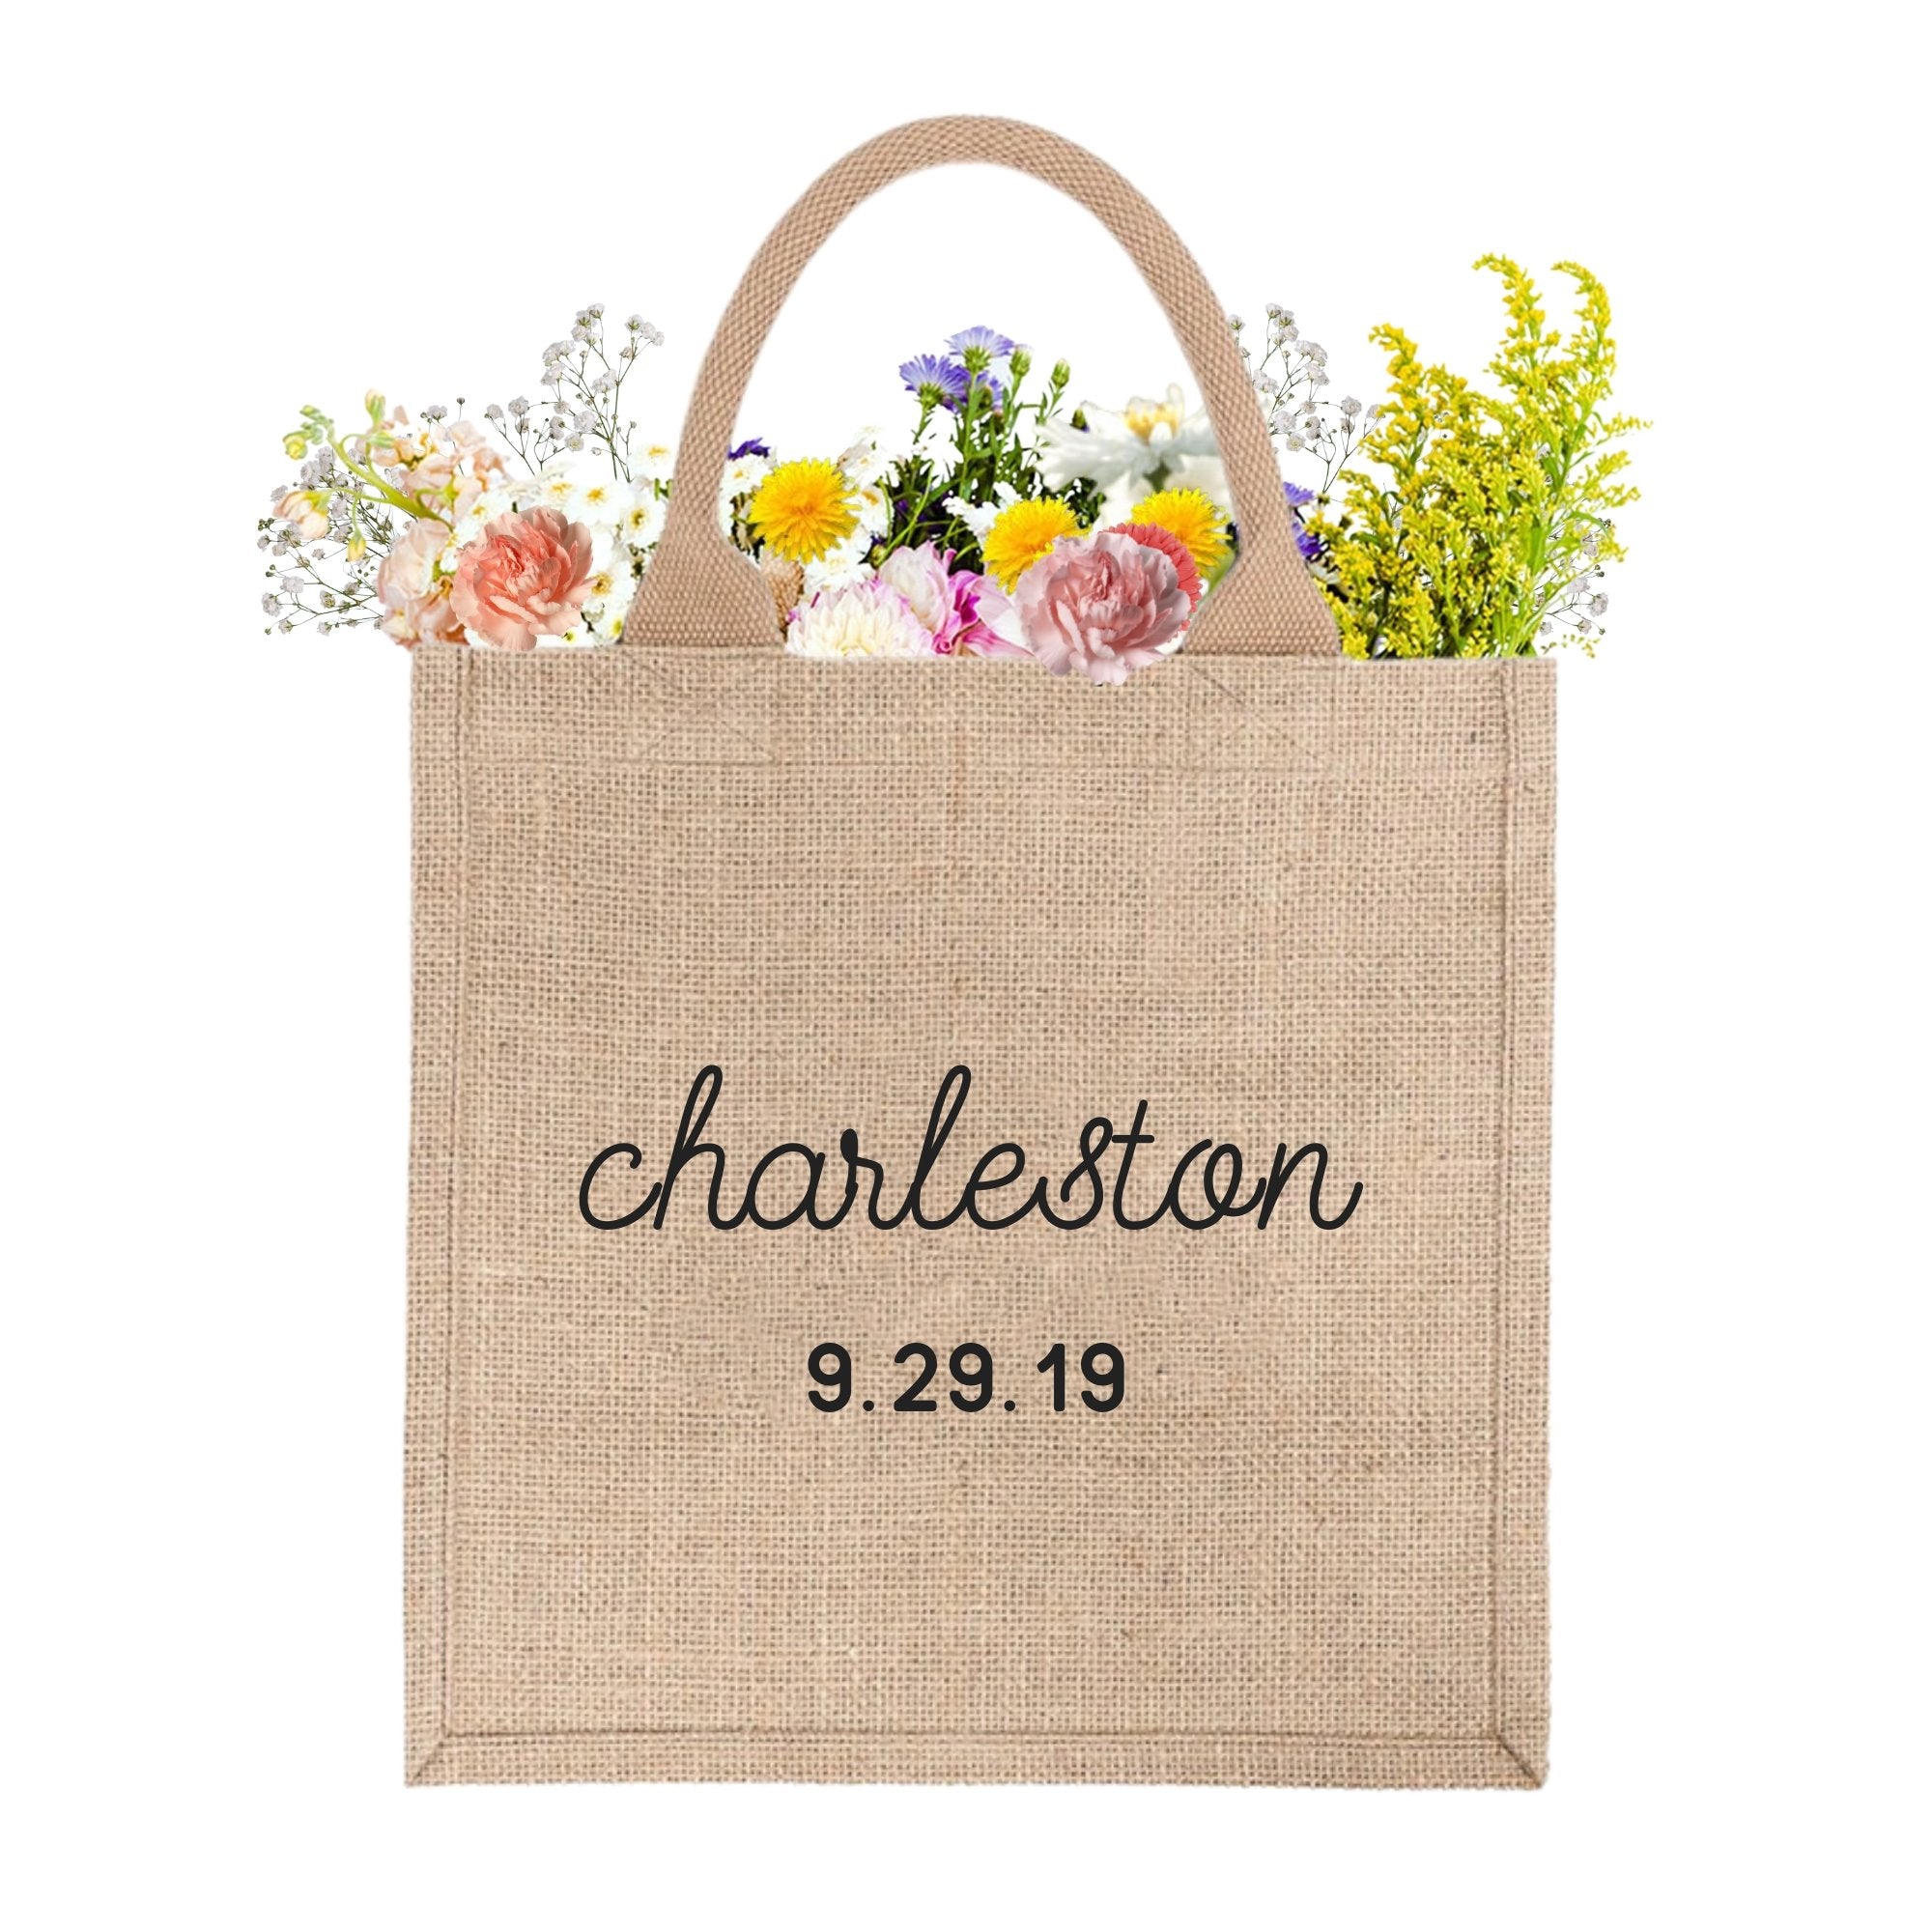 A custom jute bag reads "Charleston 9.29.19"